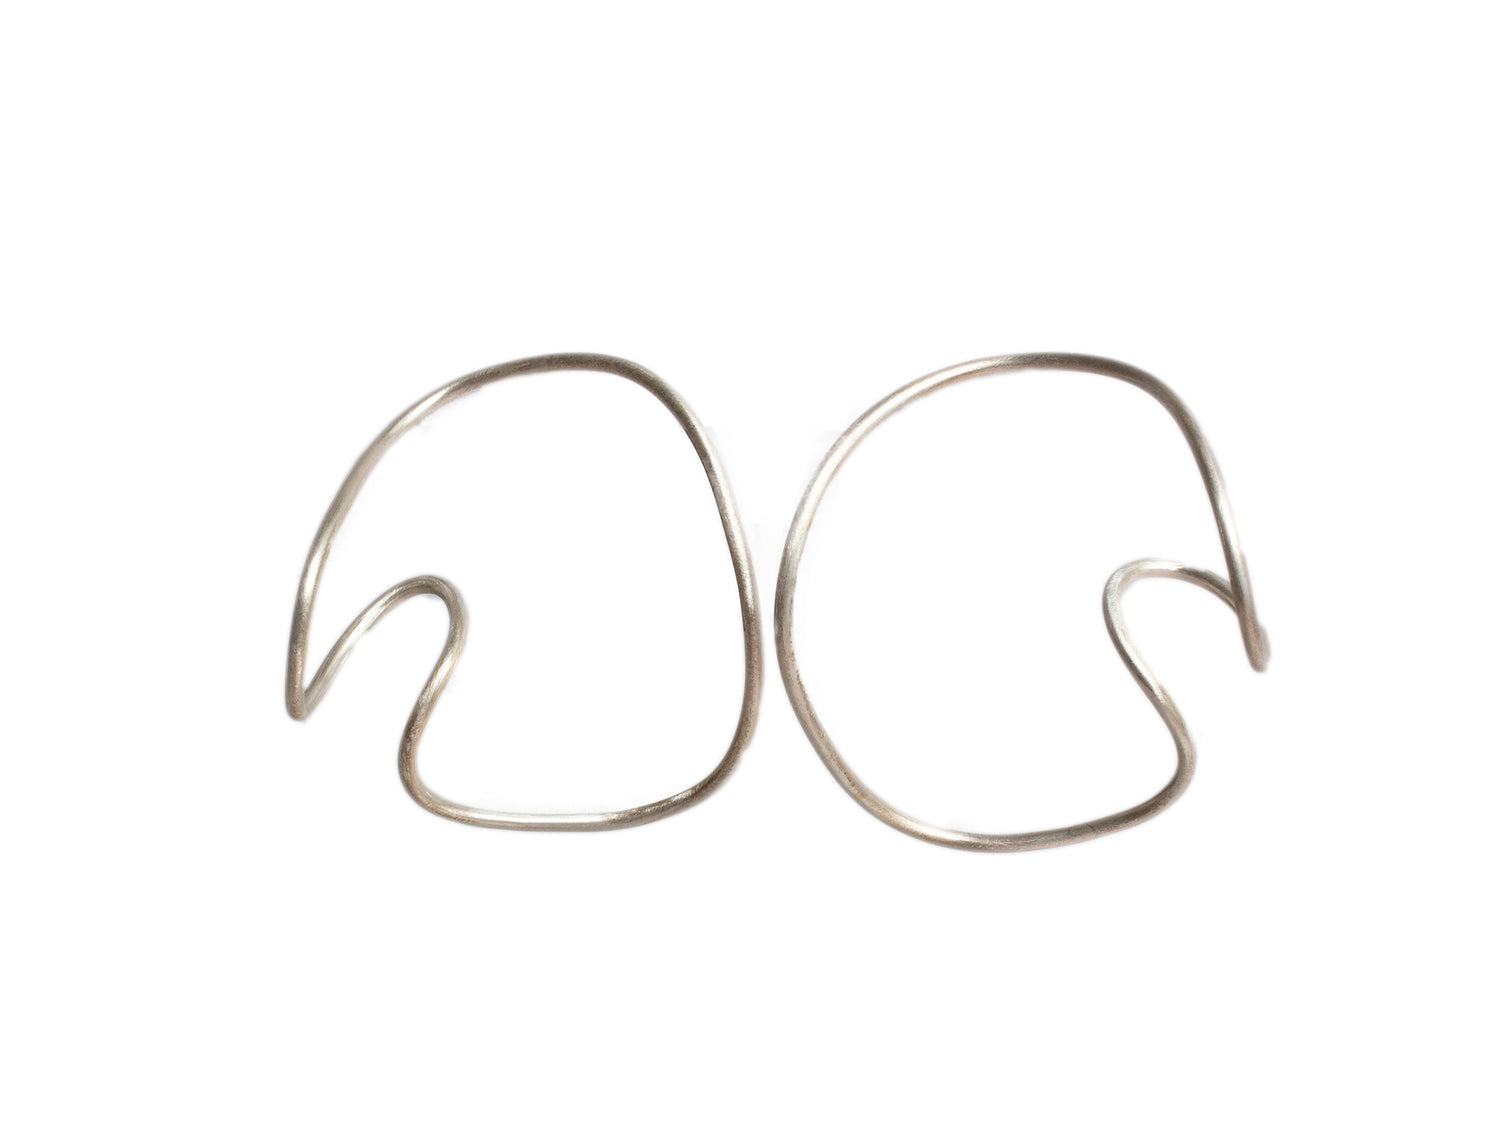 Large organic sterling silver earrings